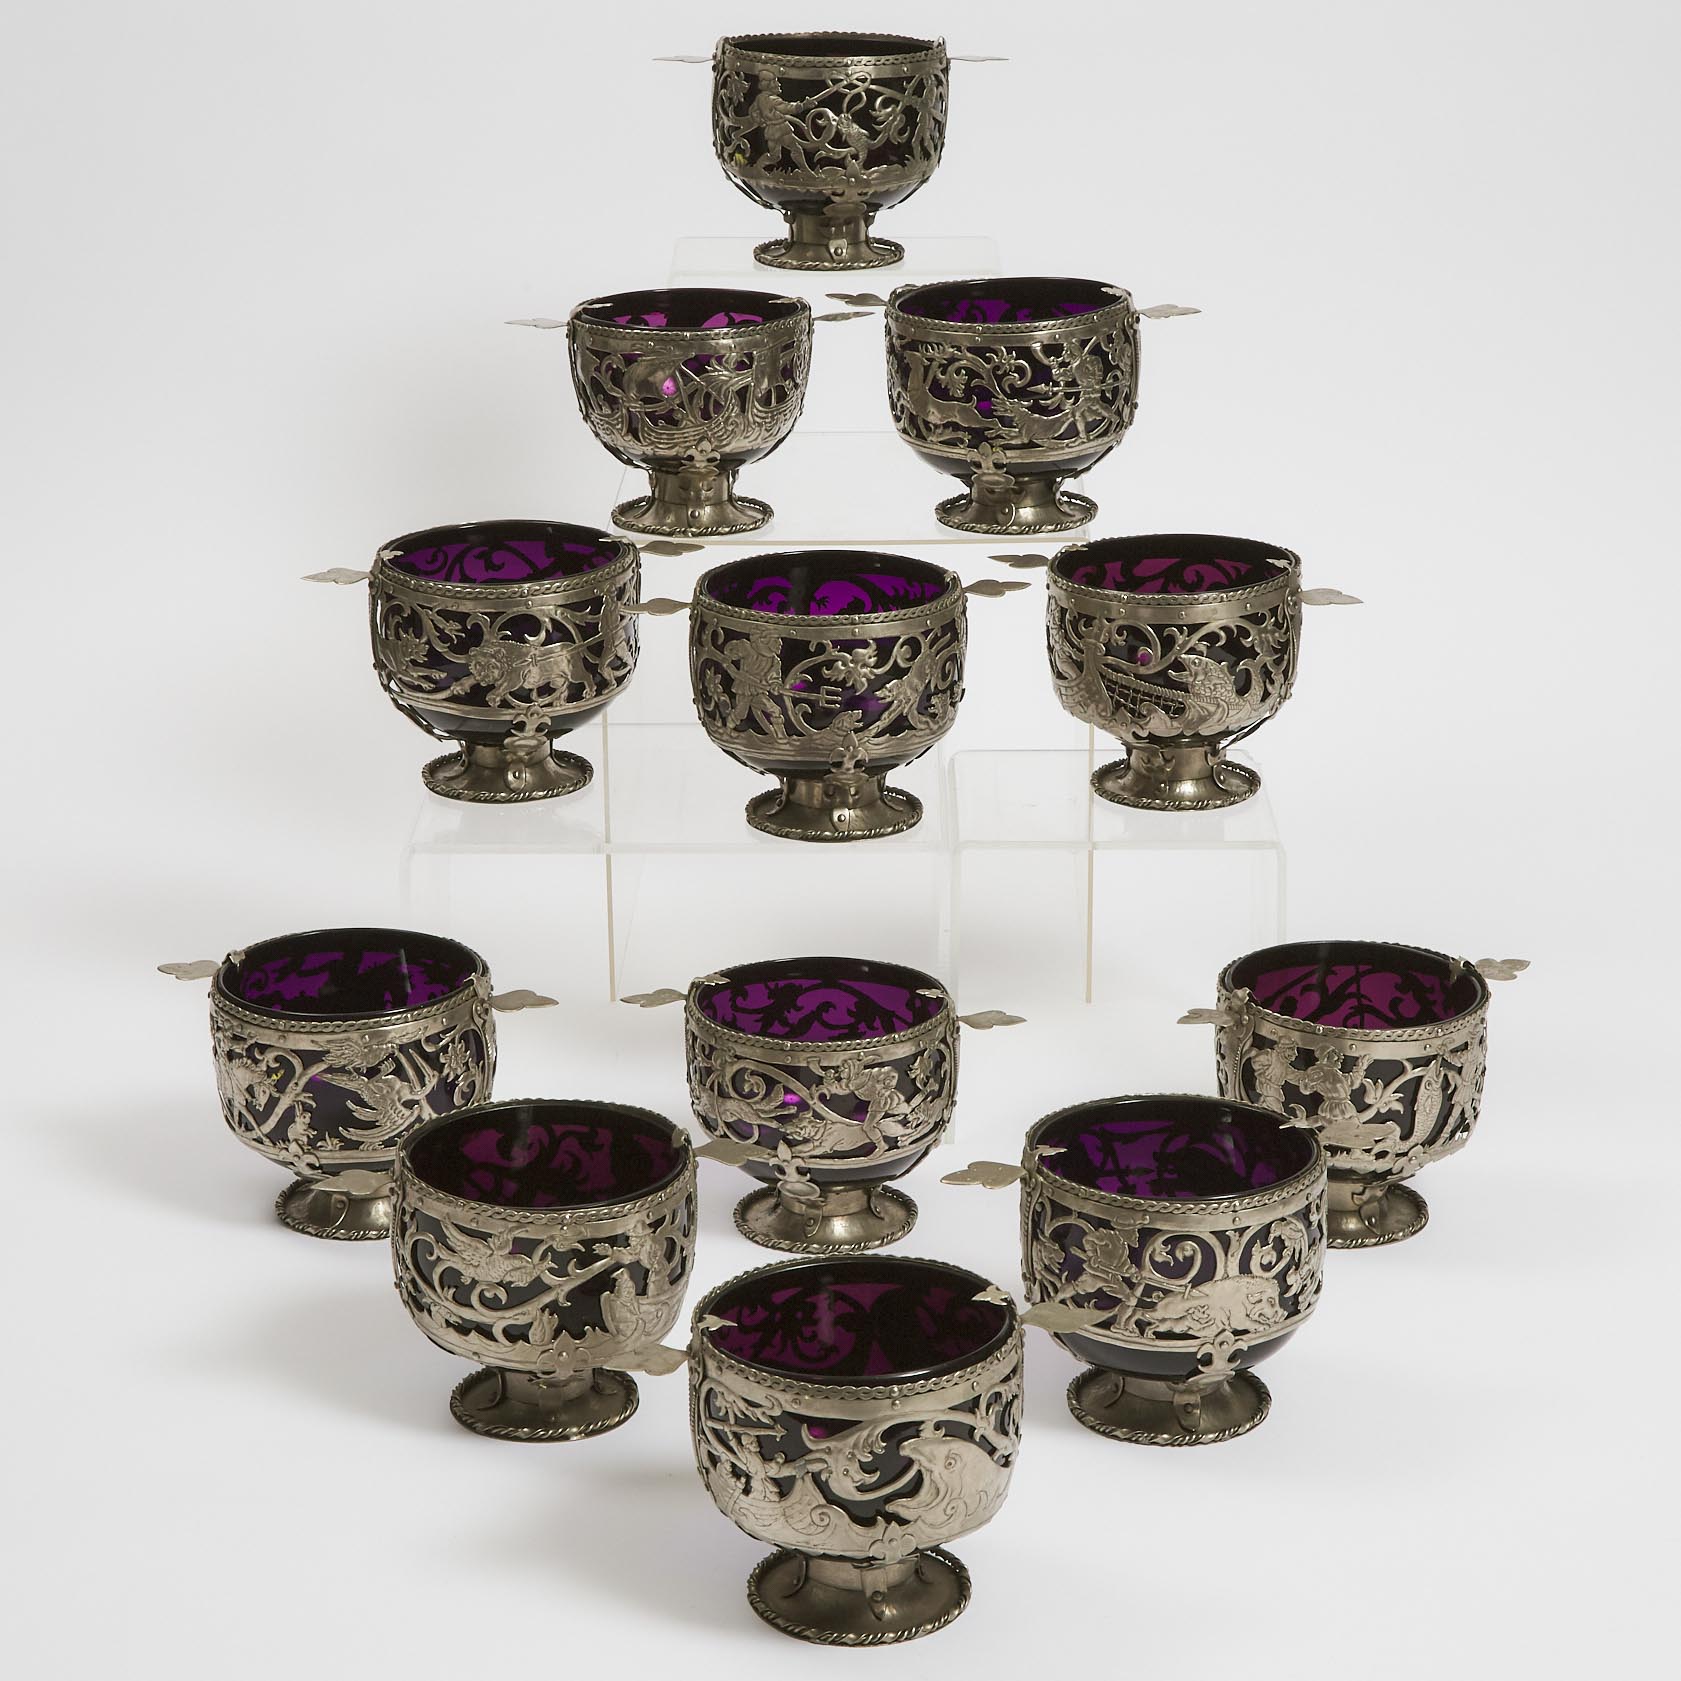 Set of 12 Finger Bowls Designed by Sigismund Goetze (British, 1866-1939) Executed by Paul Hardy (1862-1942), c.1910